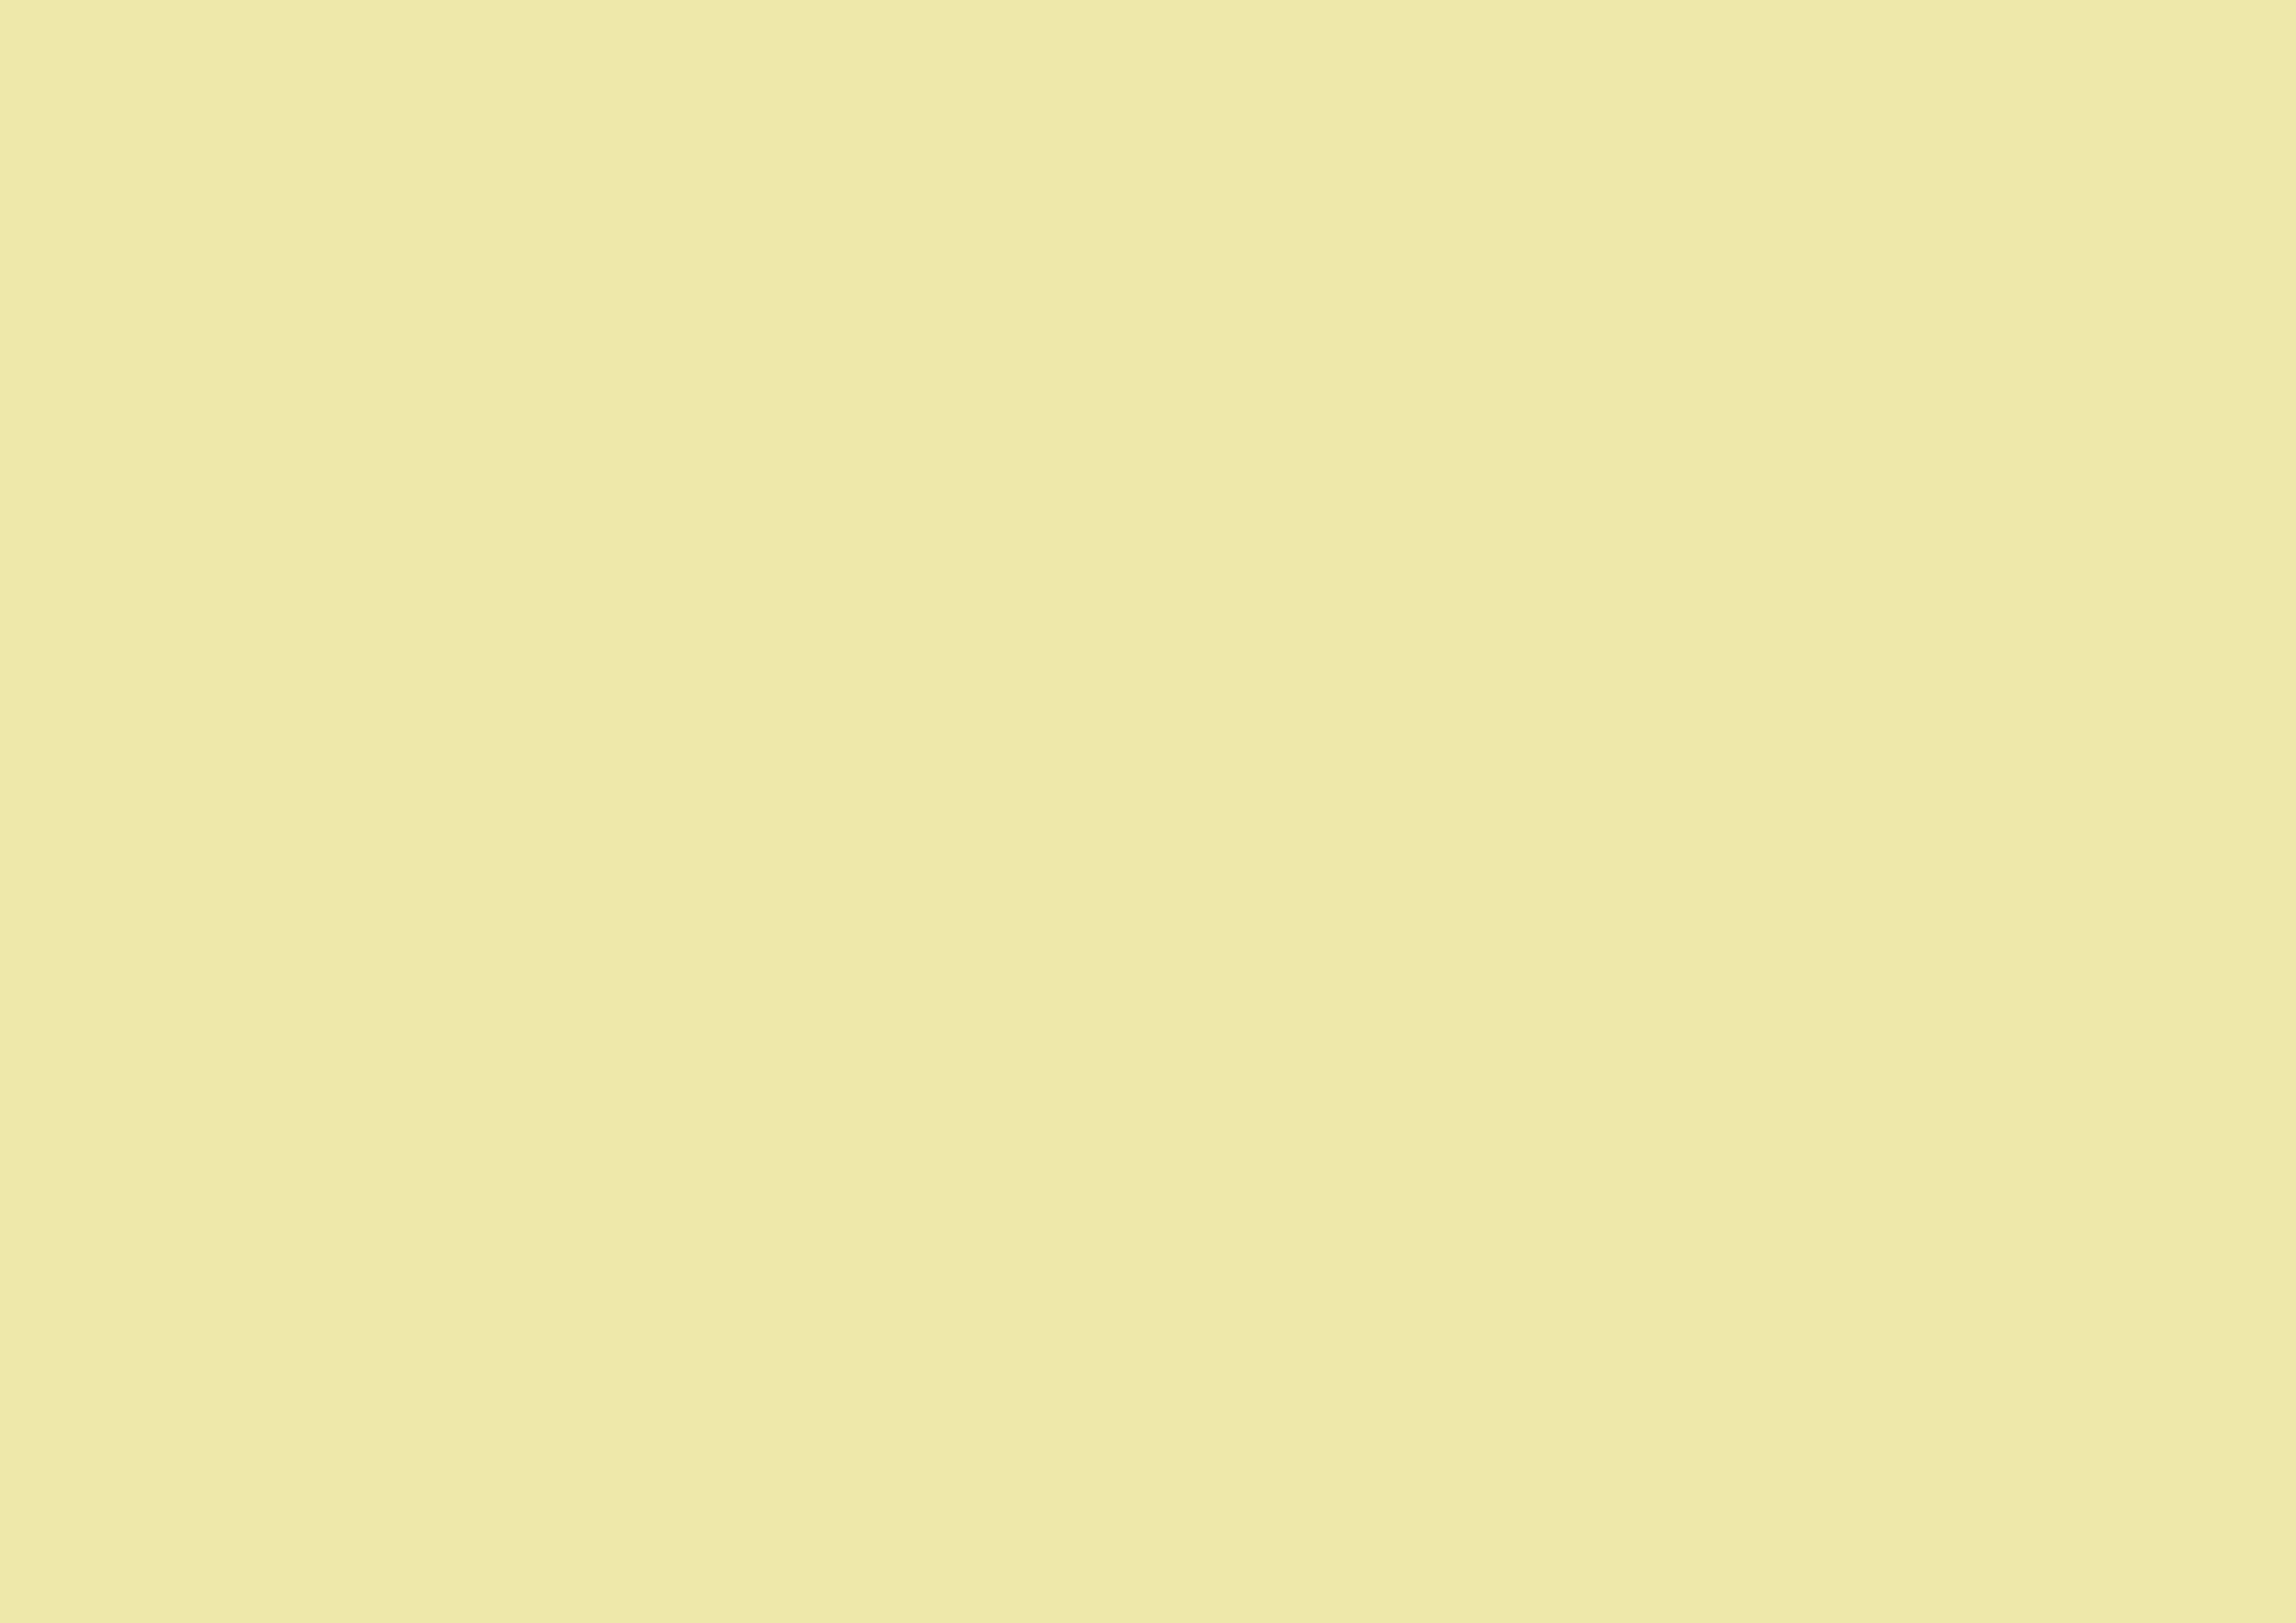 3508x2480 Pale Goldenrod Solid Color Background